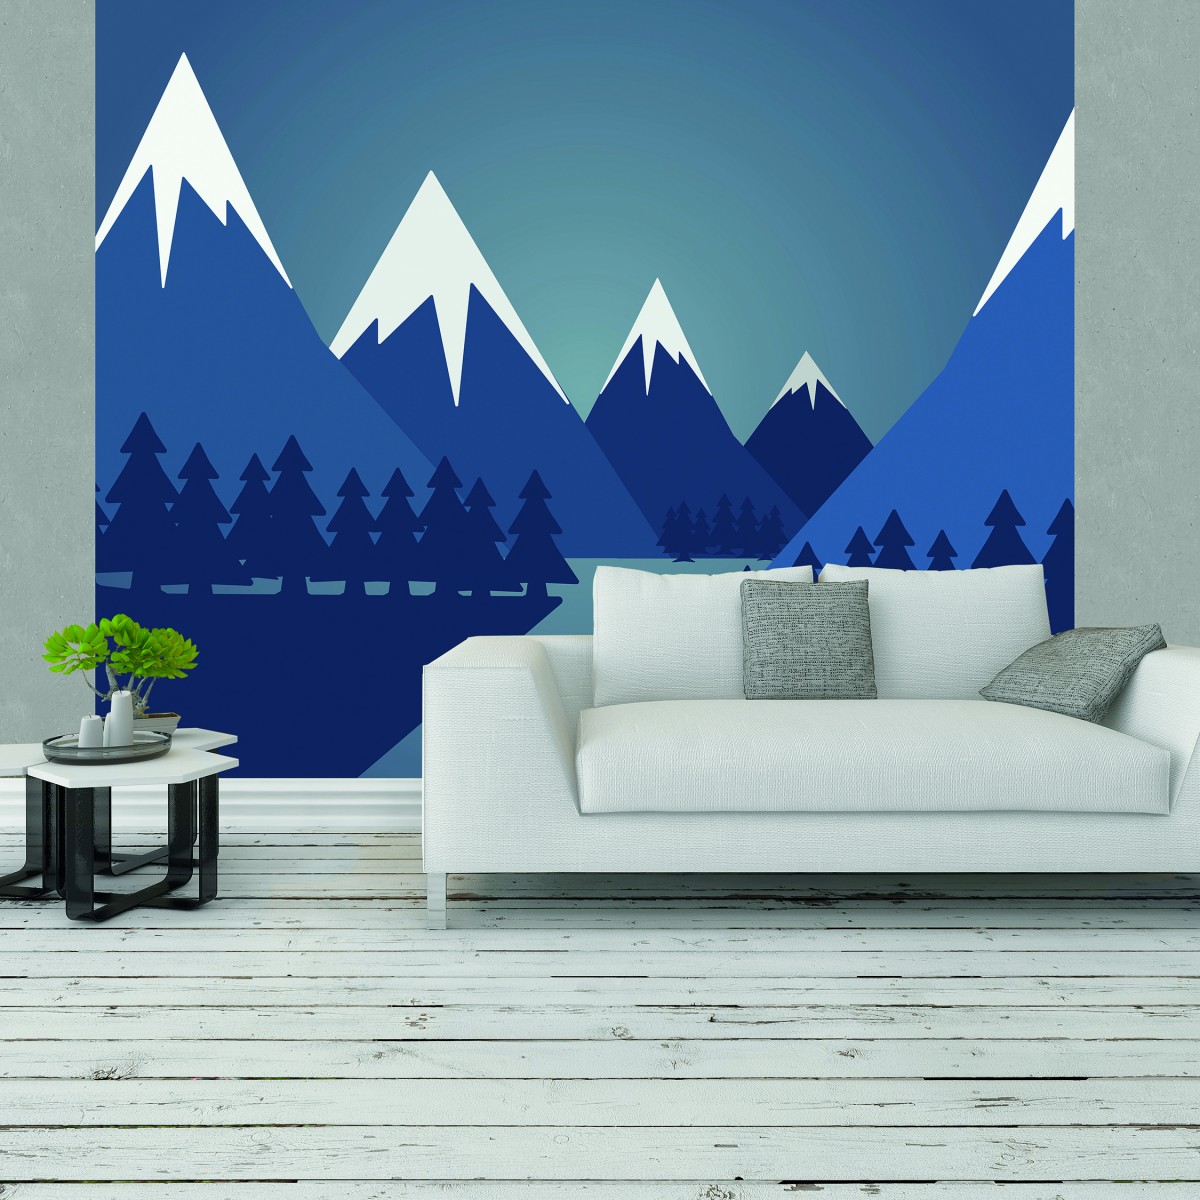 Fototapet Origin Murals ORM-MUR175M. Conține culorile: Albastru, Albastru Noapte, Albastru, Albastru Porumbel, Alb, Alb Semnal, Gri, Gri Argintiu